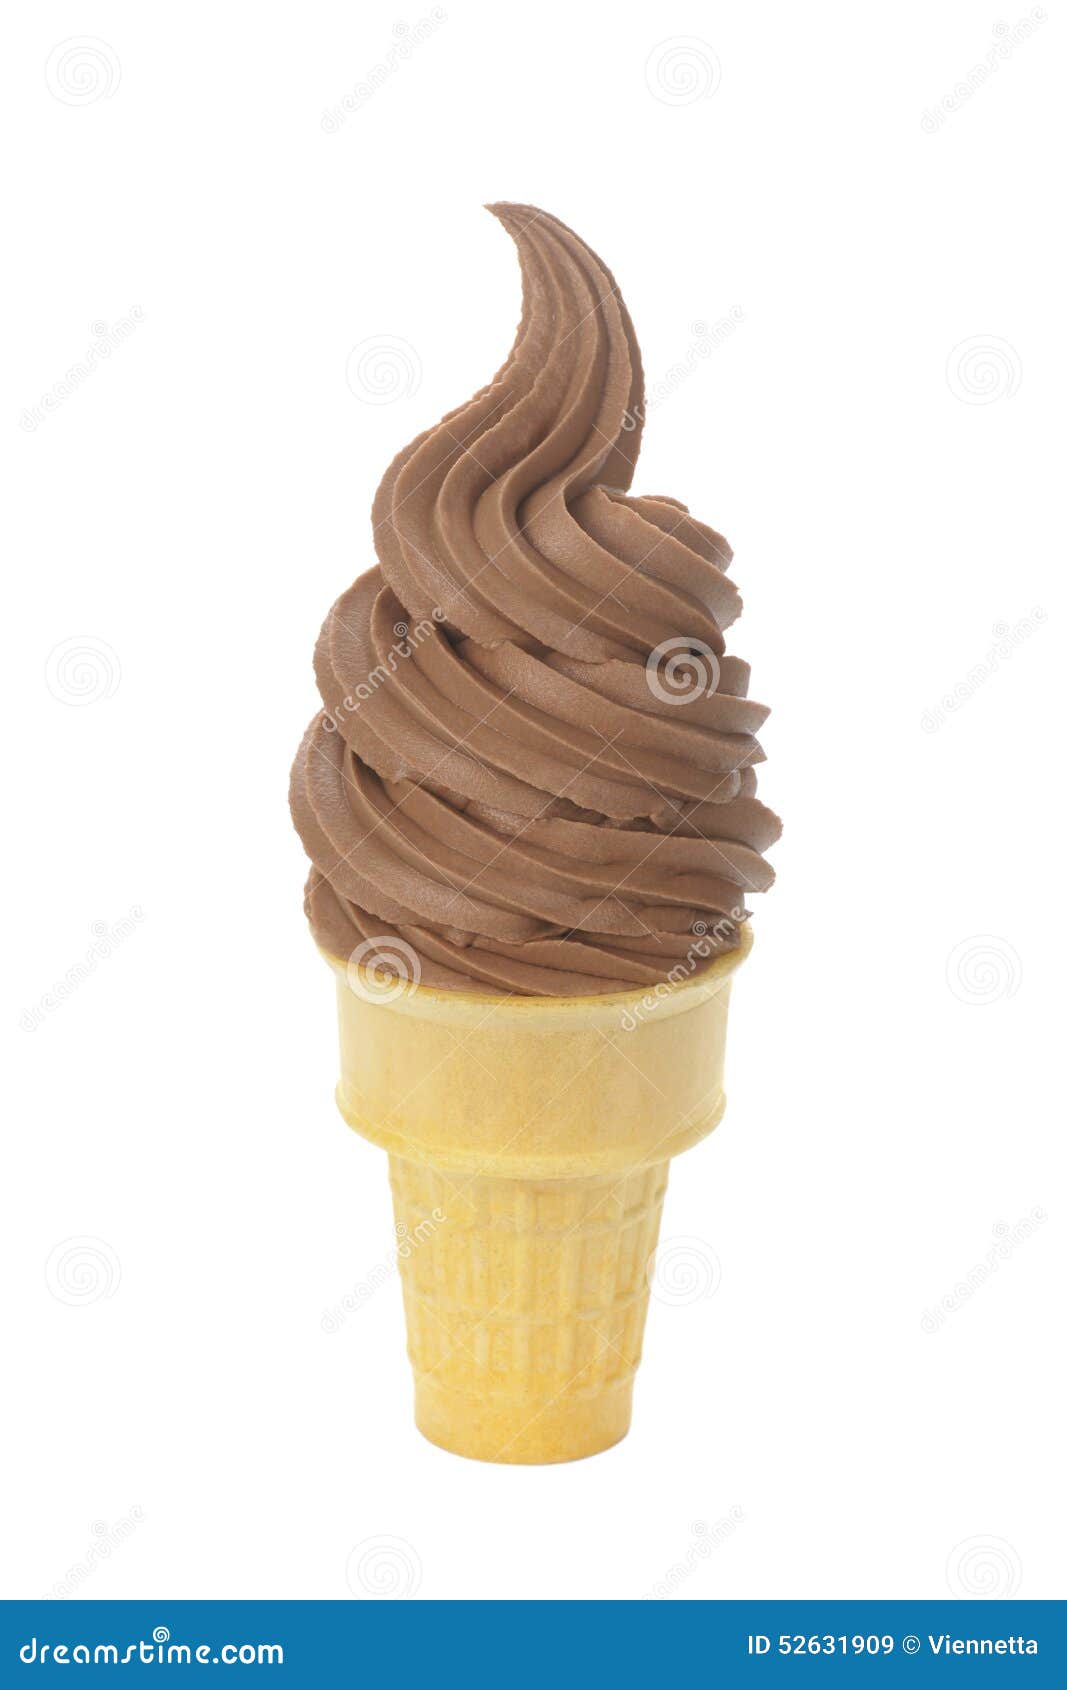 chocolate soft serve ice cream in a wafer cone